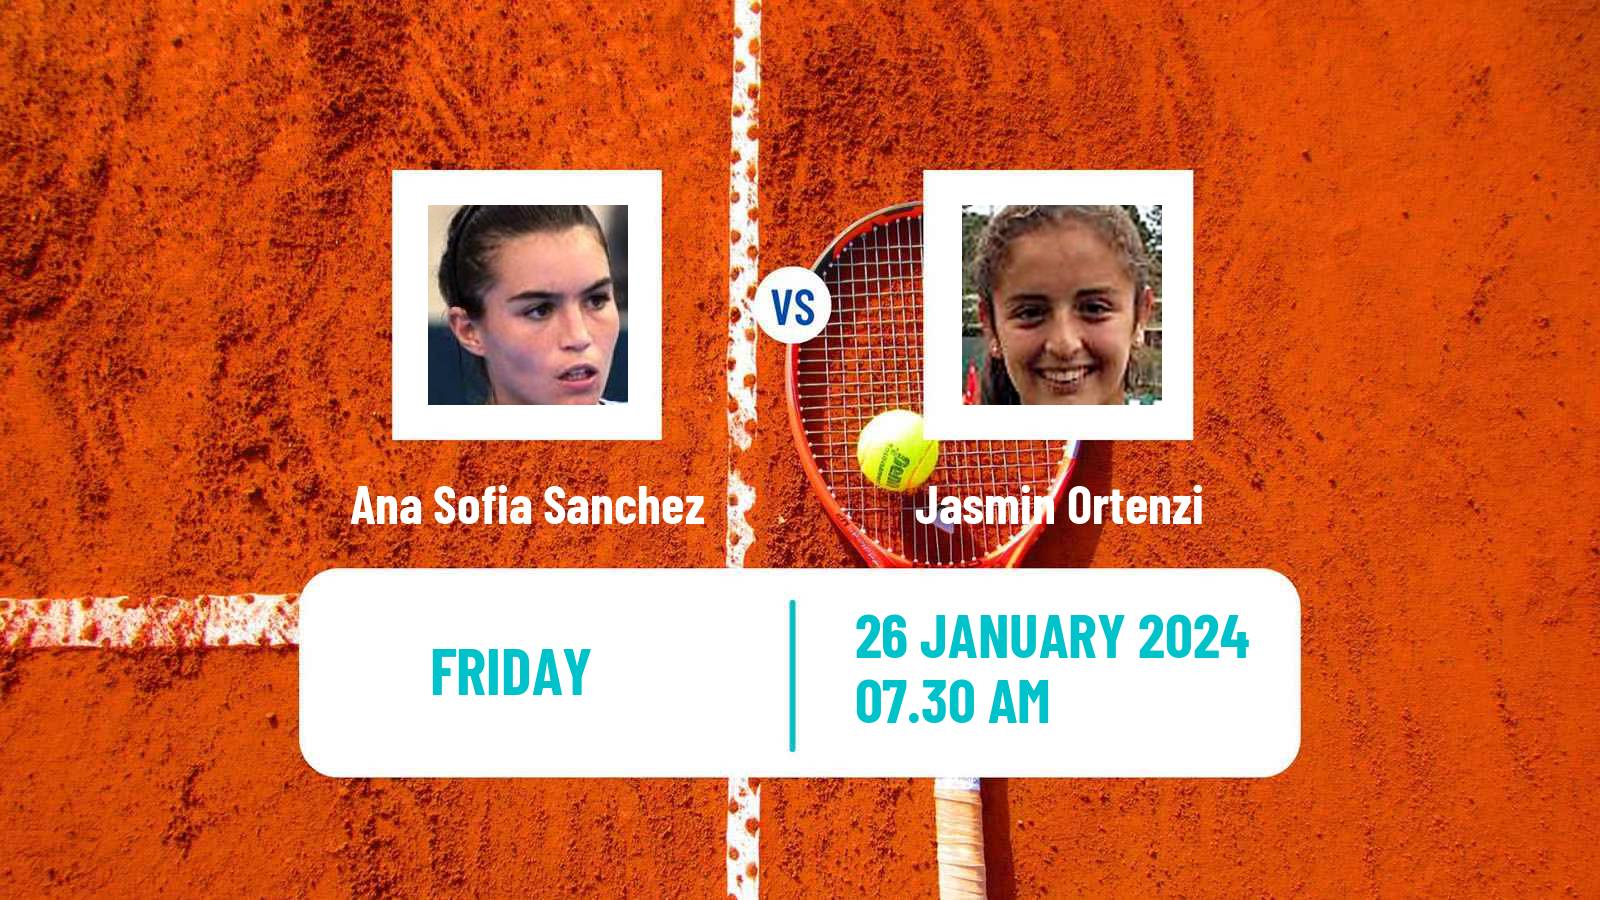 Tennis ITF W35 Buenos Aires 2 Women Ana Sofia Sanchez - Jasmin Ortenzi